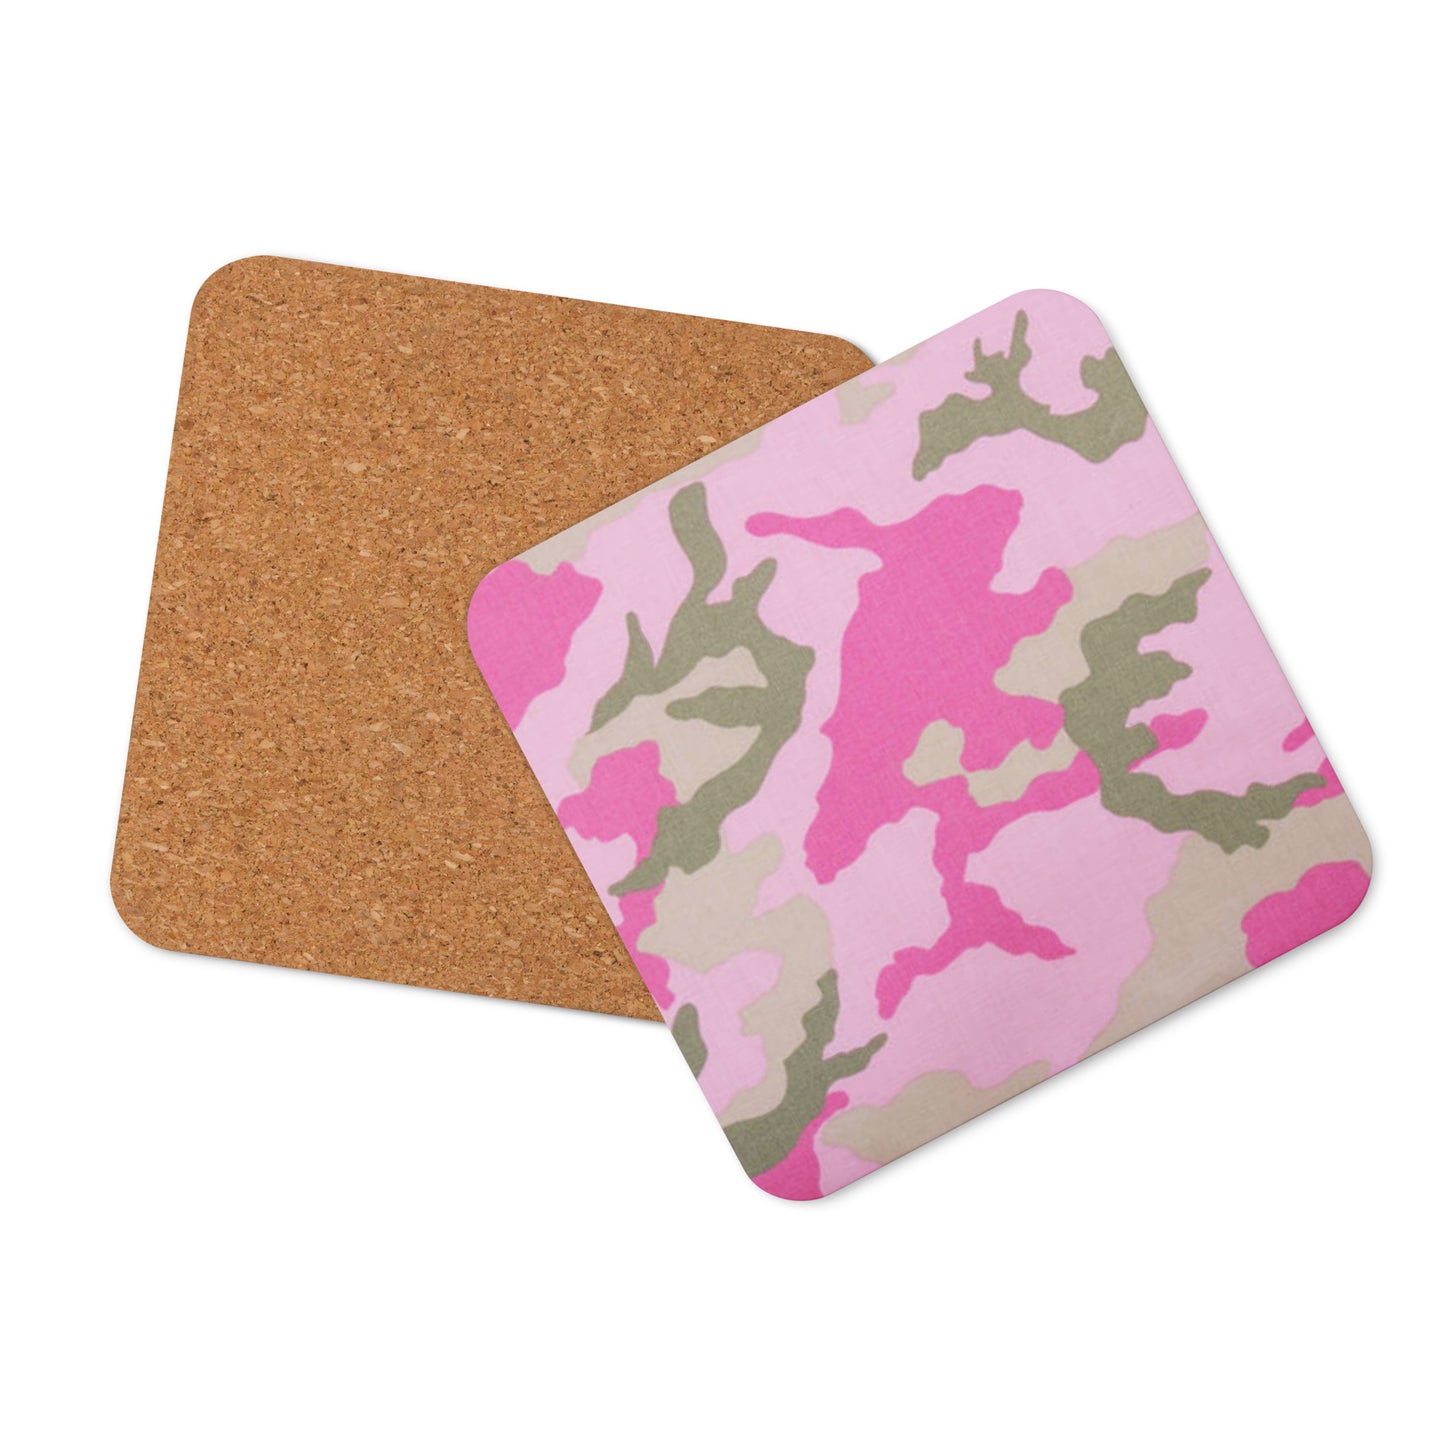 Cork-back coaster - Pink Camouflage